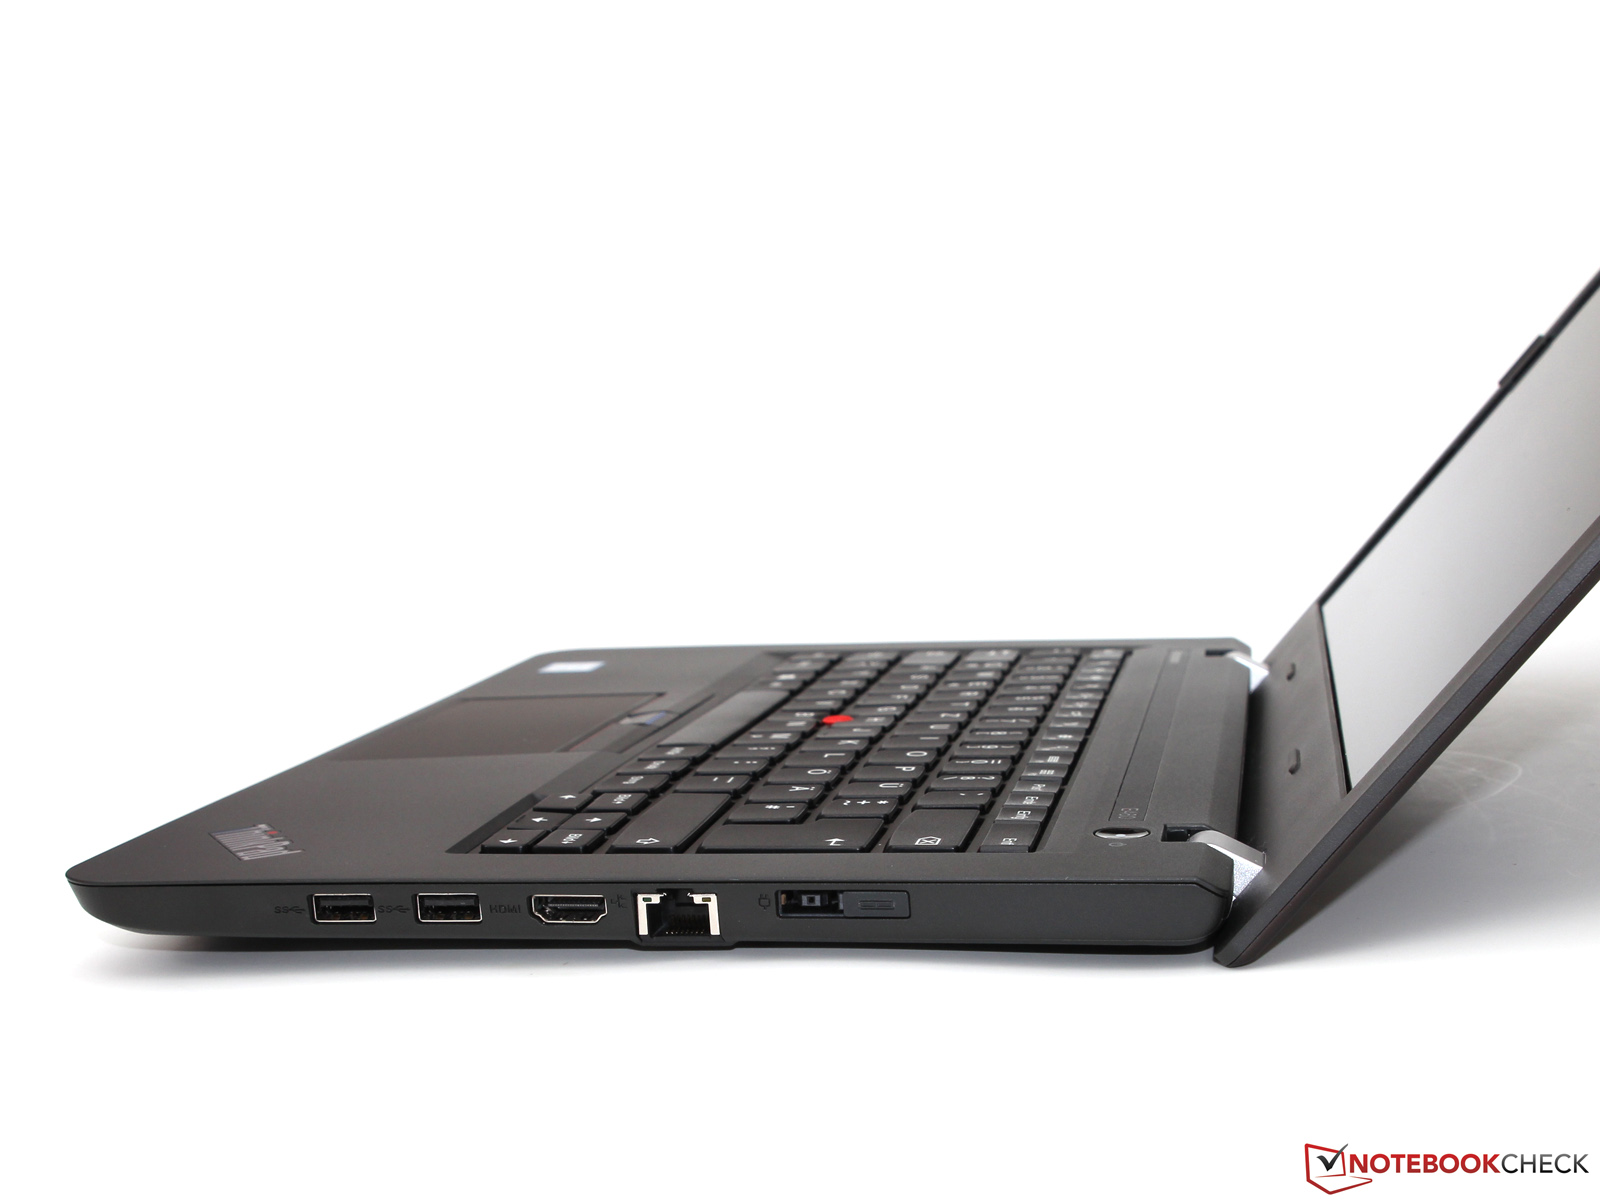 LENOVO ThinkPad E460 core i5 8GB 192GB - ノートPC